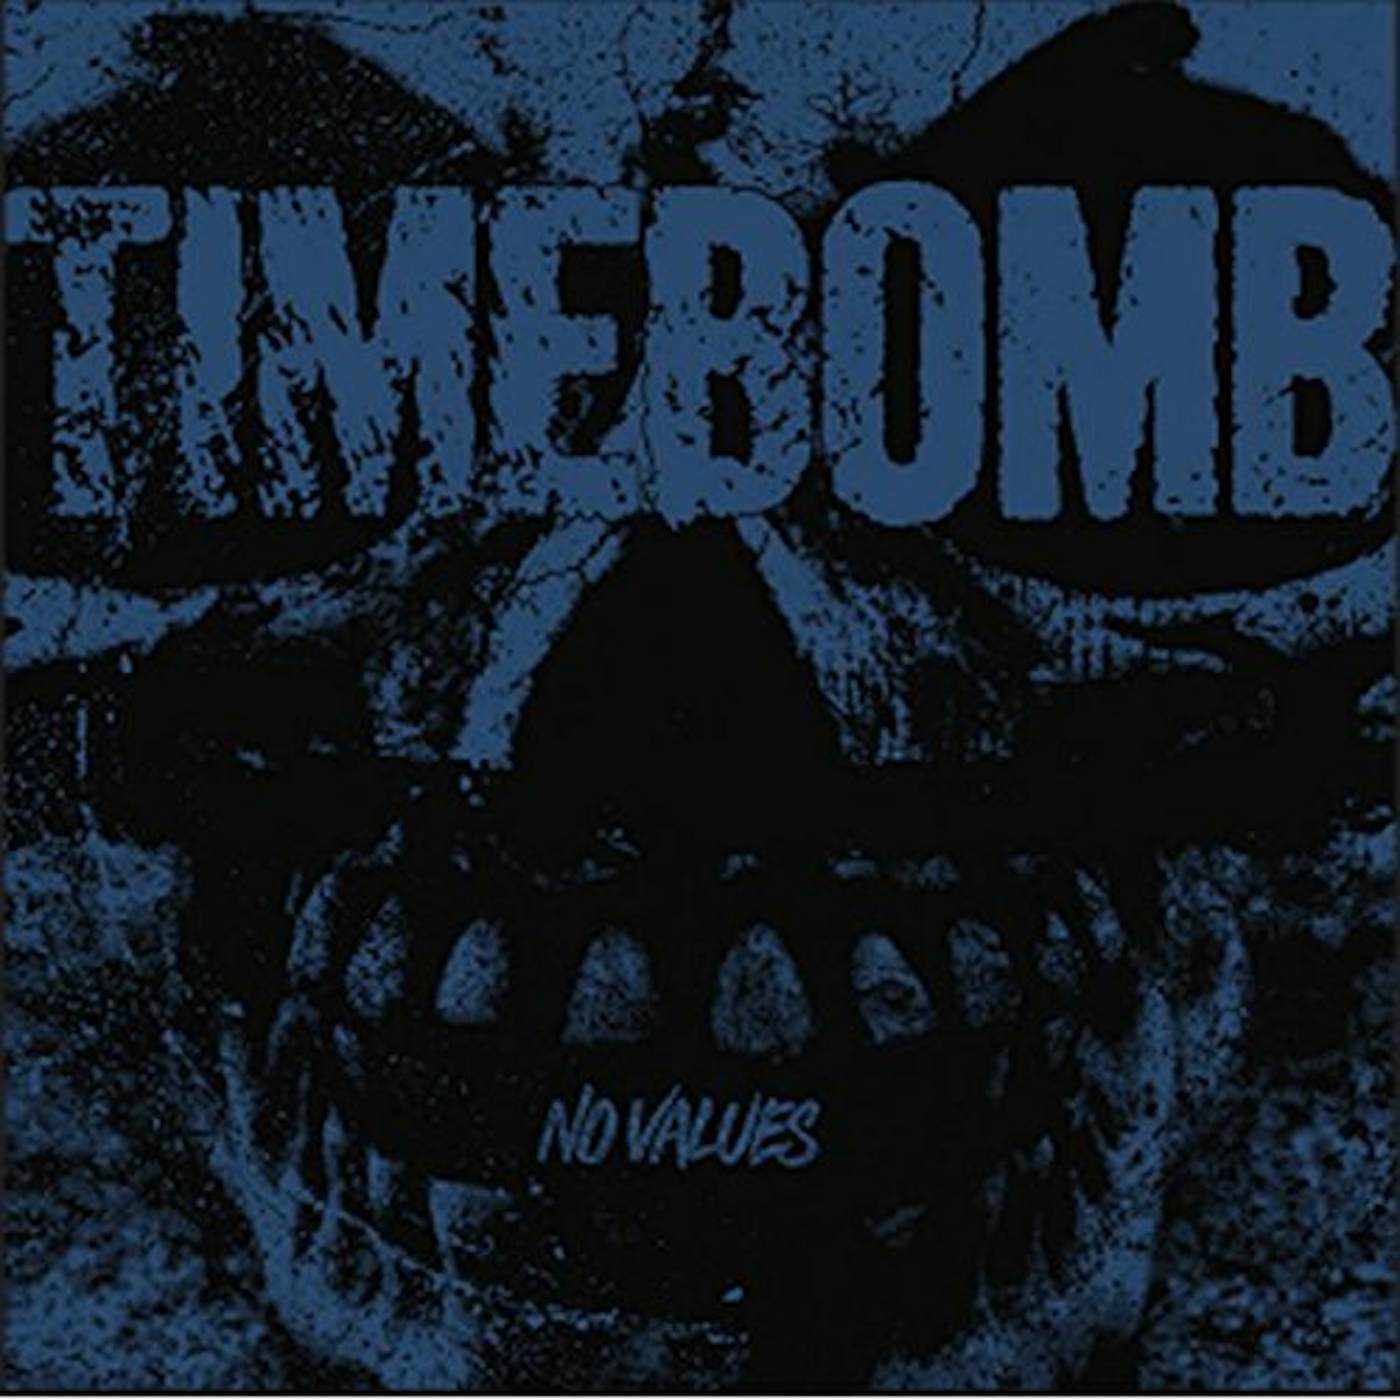 timebomb No Values Vinyl Record